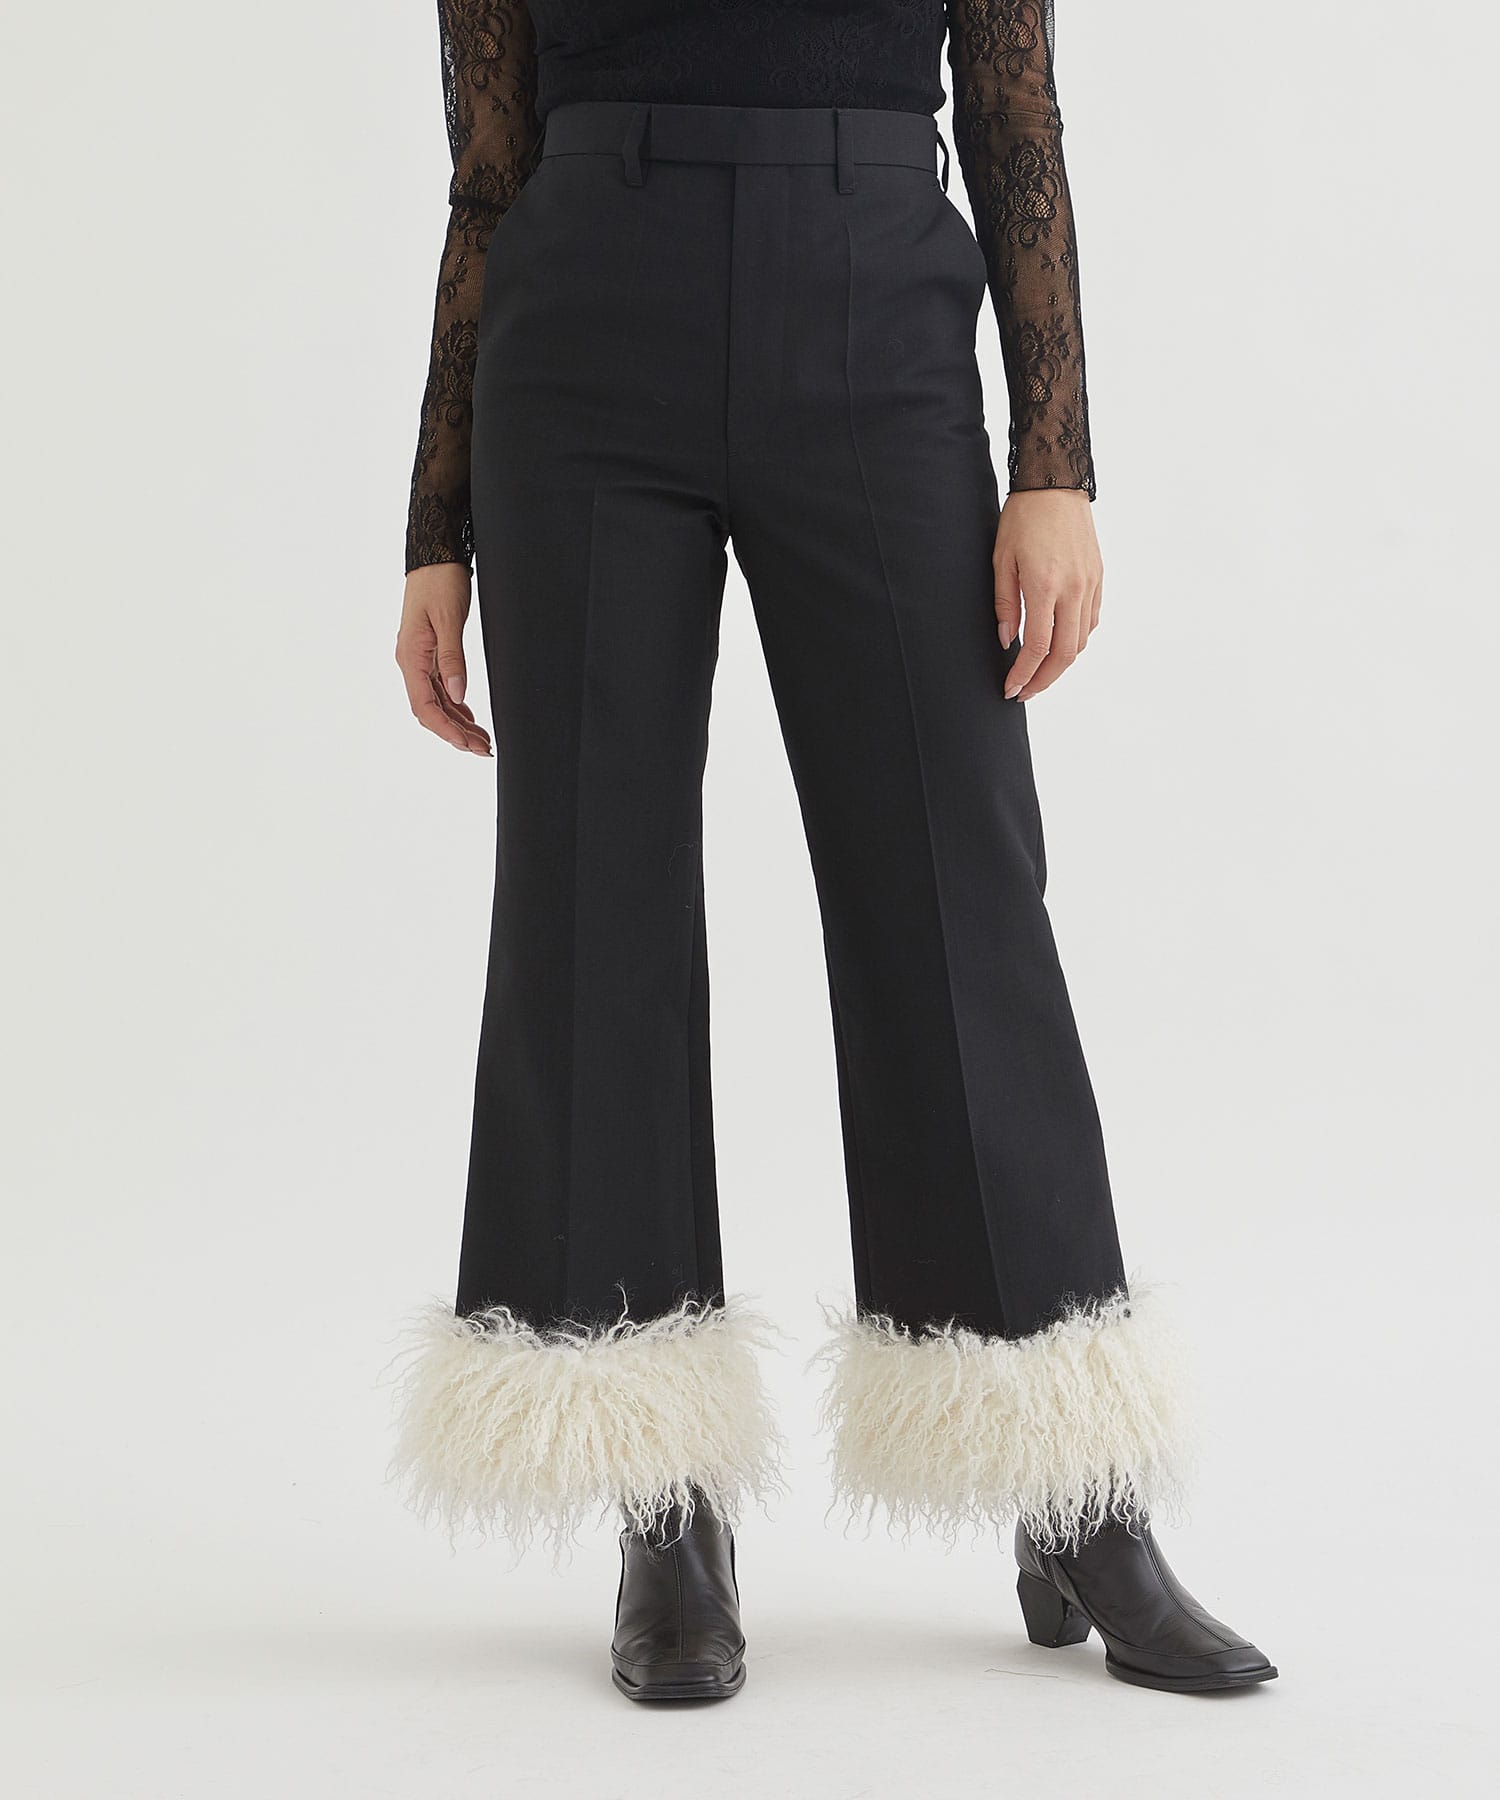 Wool bonding pants with fur